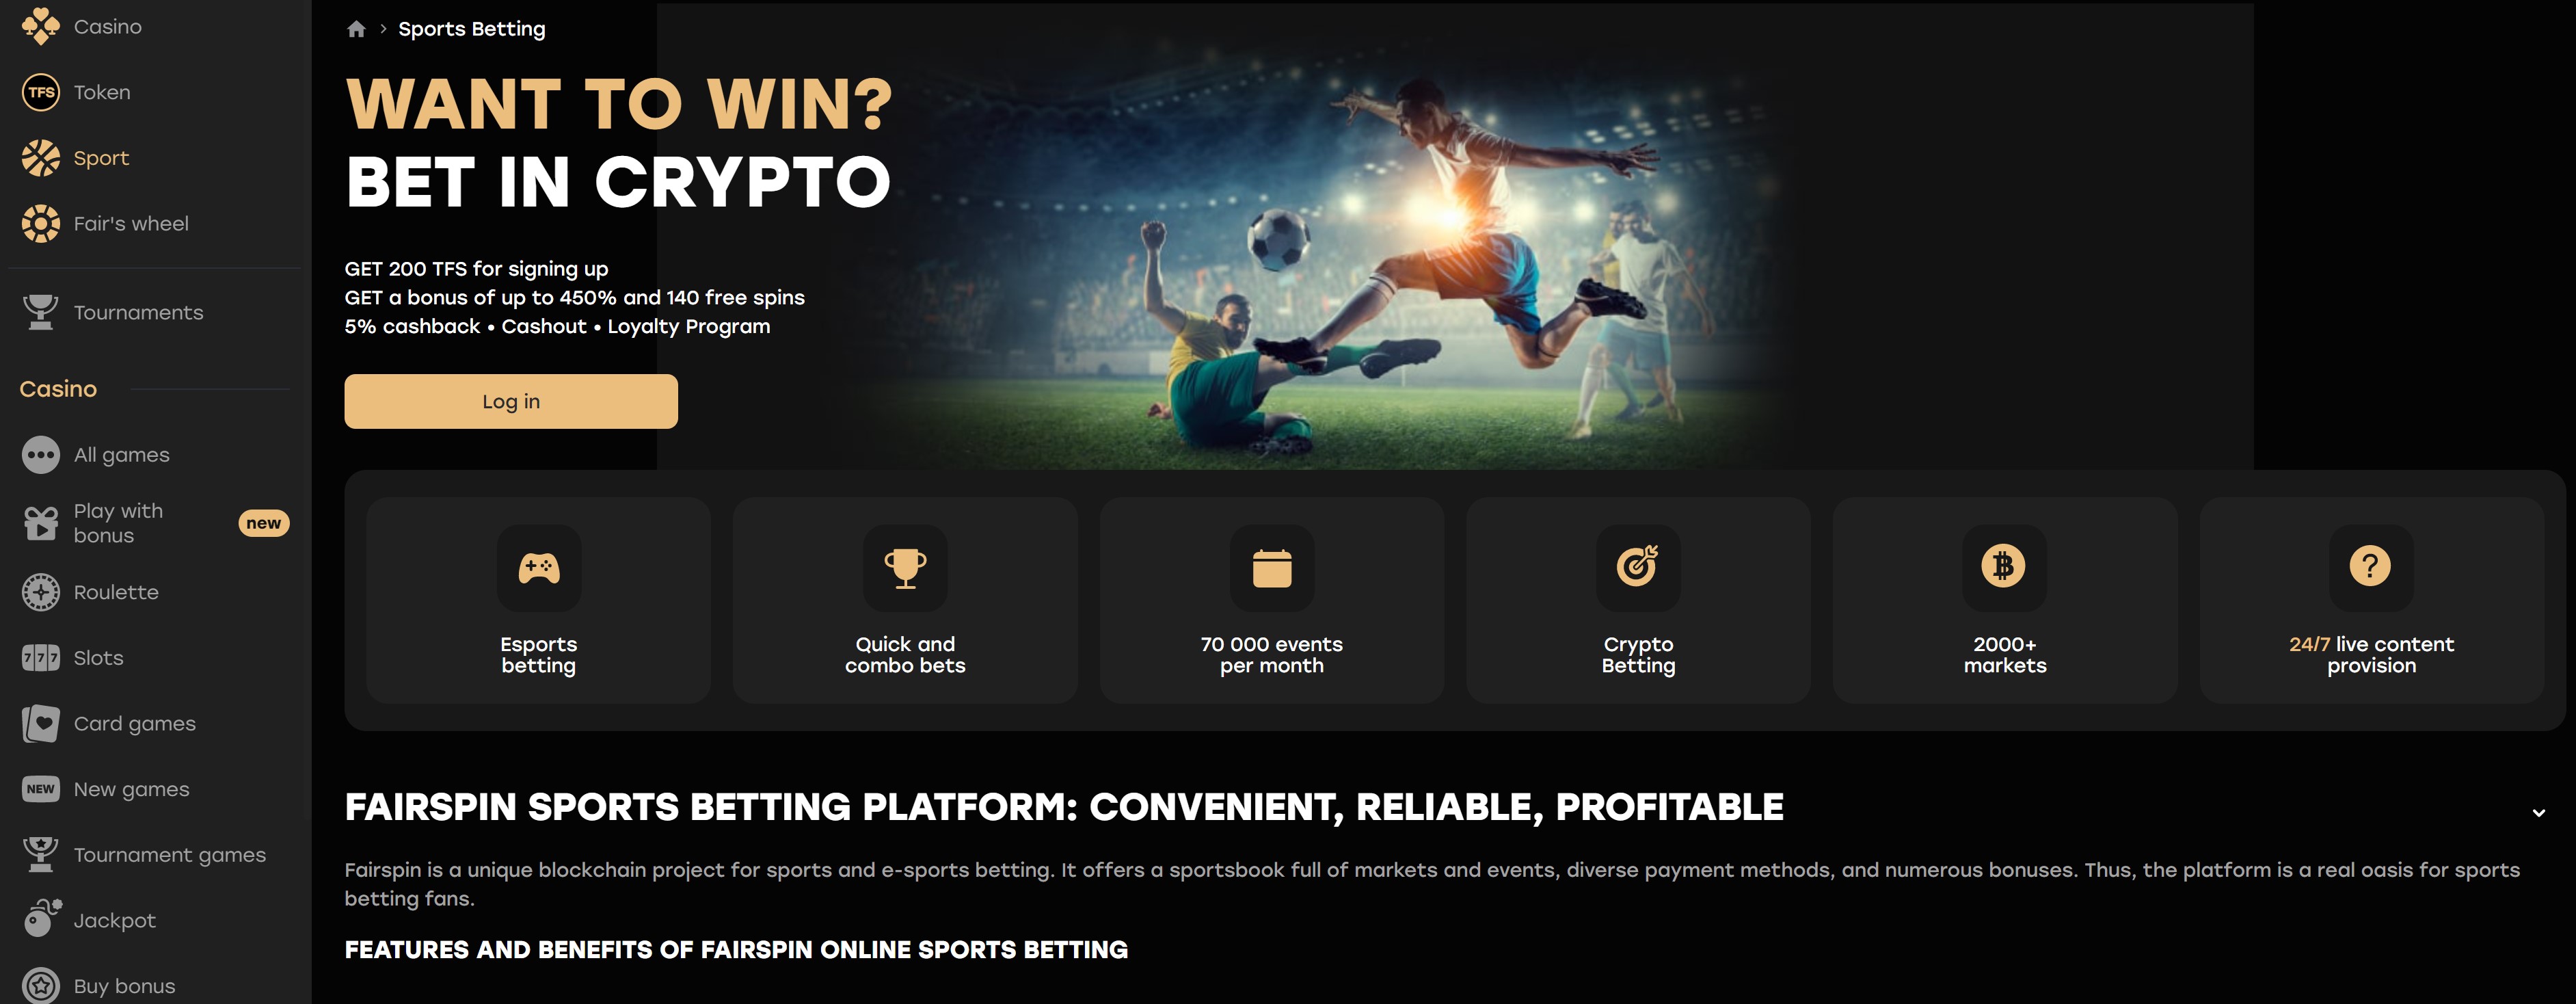 fairspin blackjack casino homepage